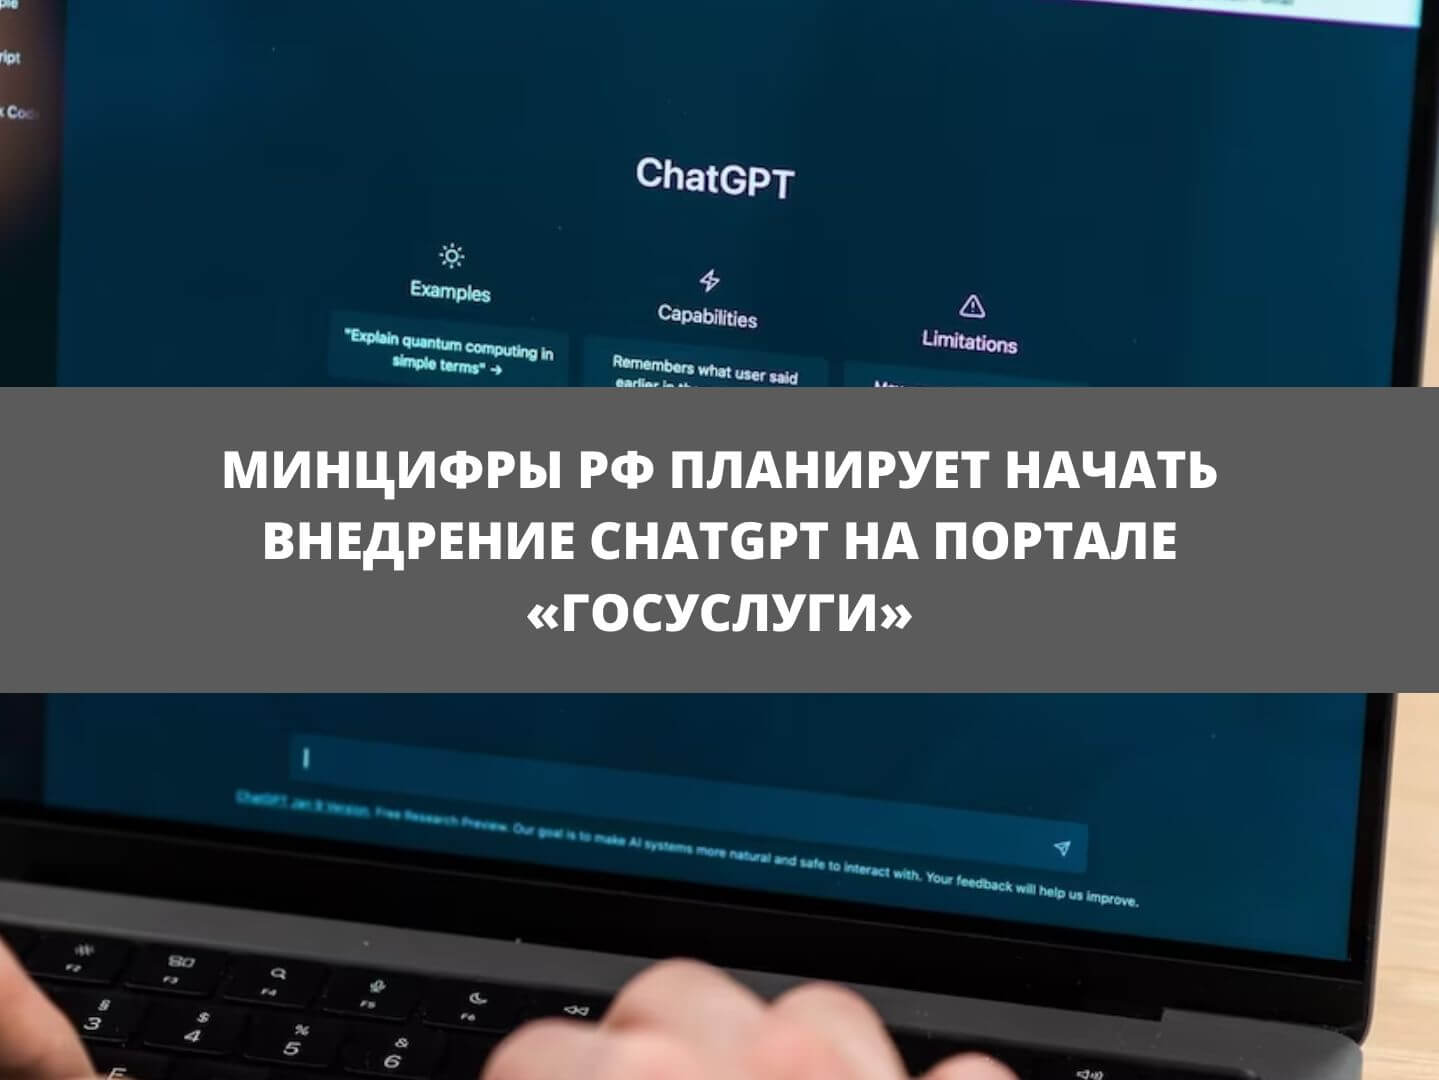 Консультации граждан на портале «Госуслуги» при помощи технологии ChatGPT